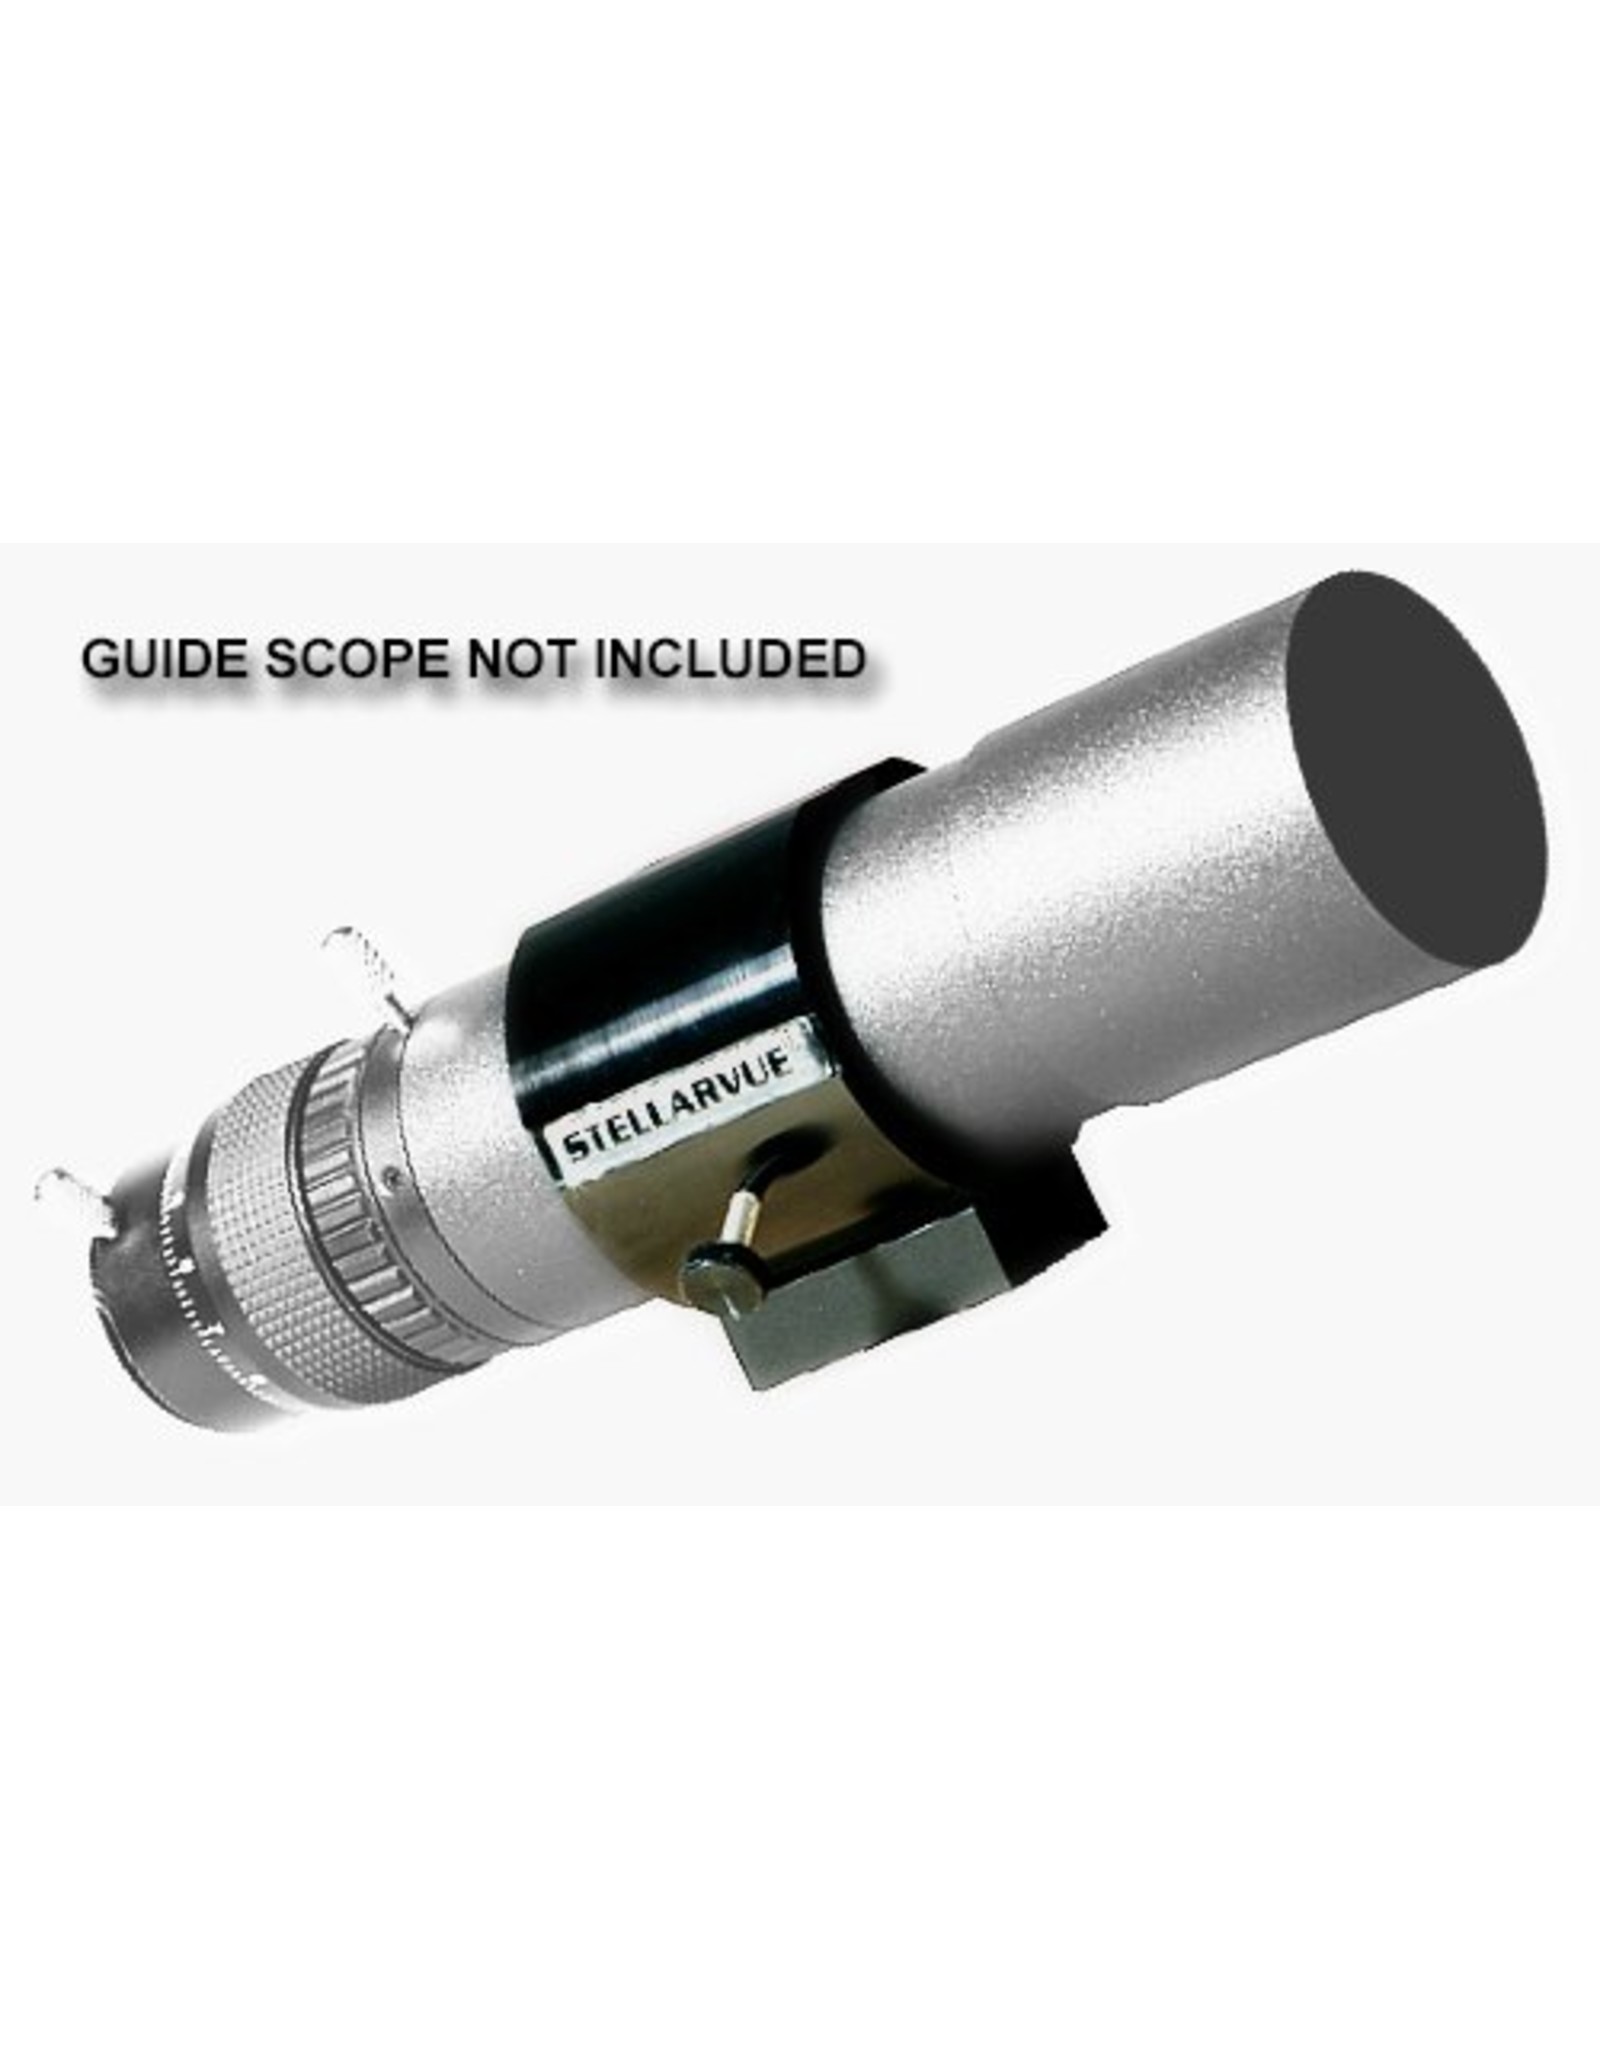 Stellarvue Stellarvue Clamshell for 50 mm Finder or Guidescope - R050C